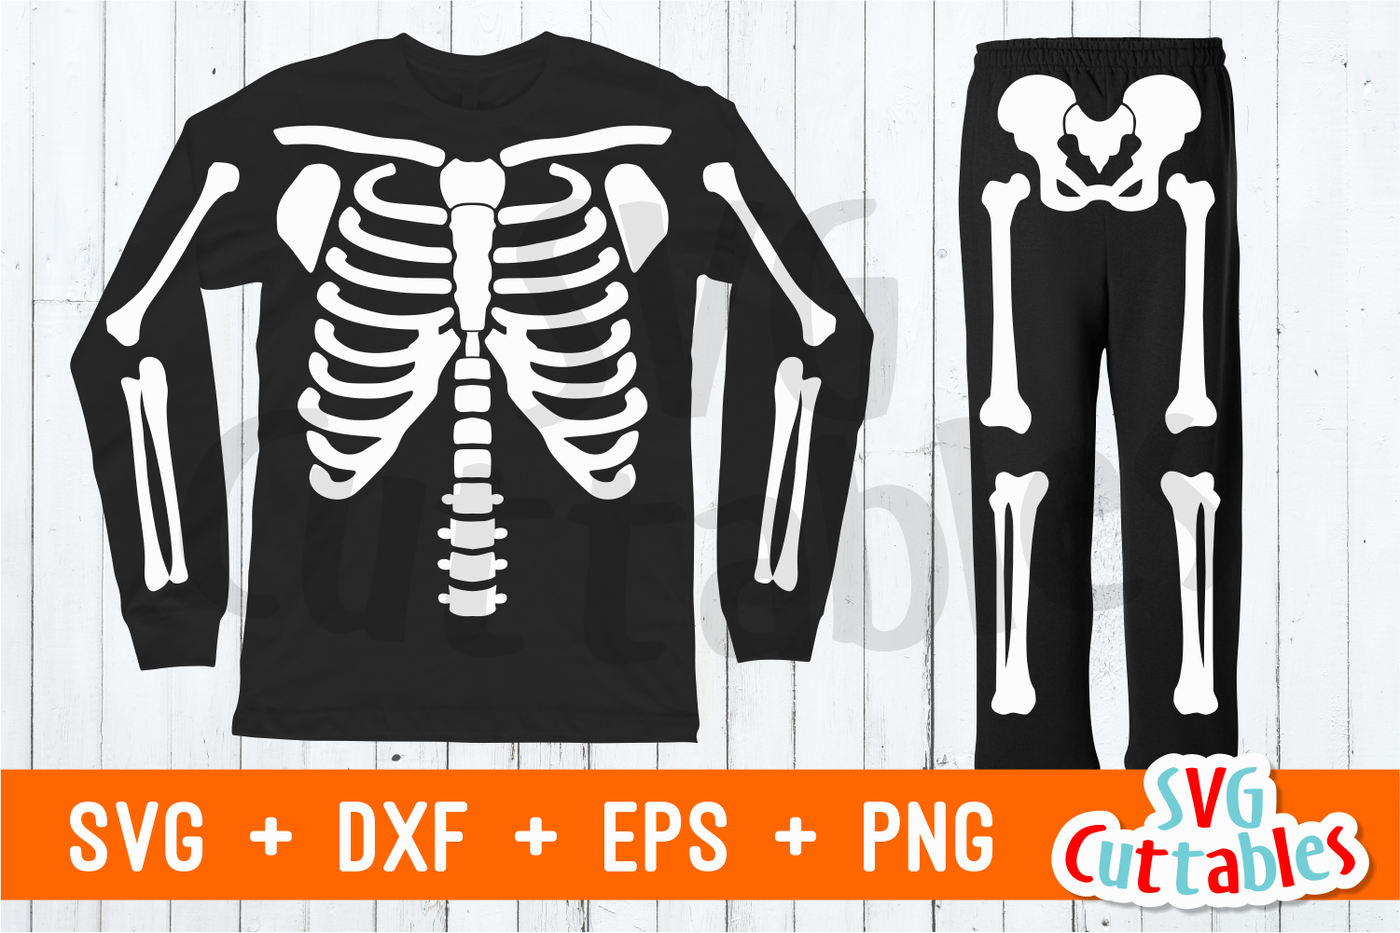 skeleton-t-shirt-design-by-svg-cuttables-thehungryjpeg